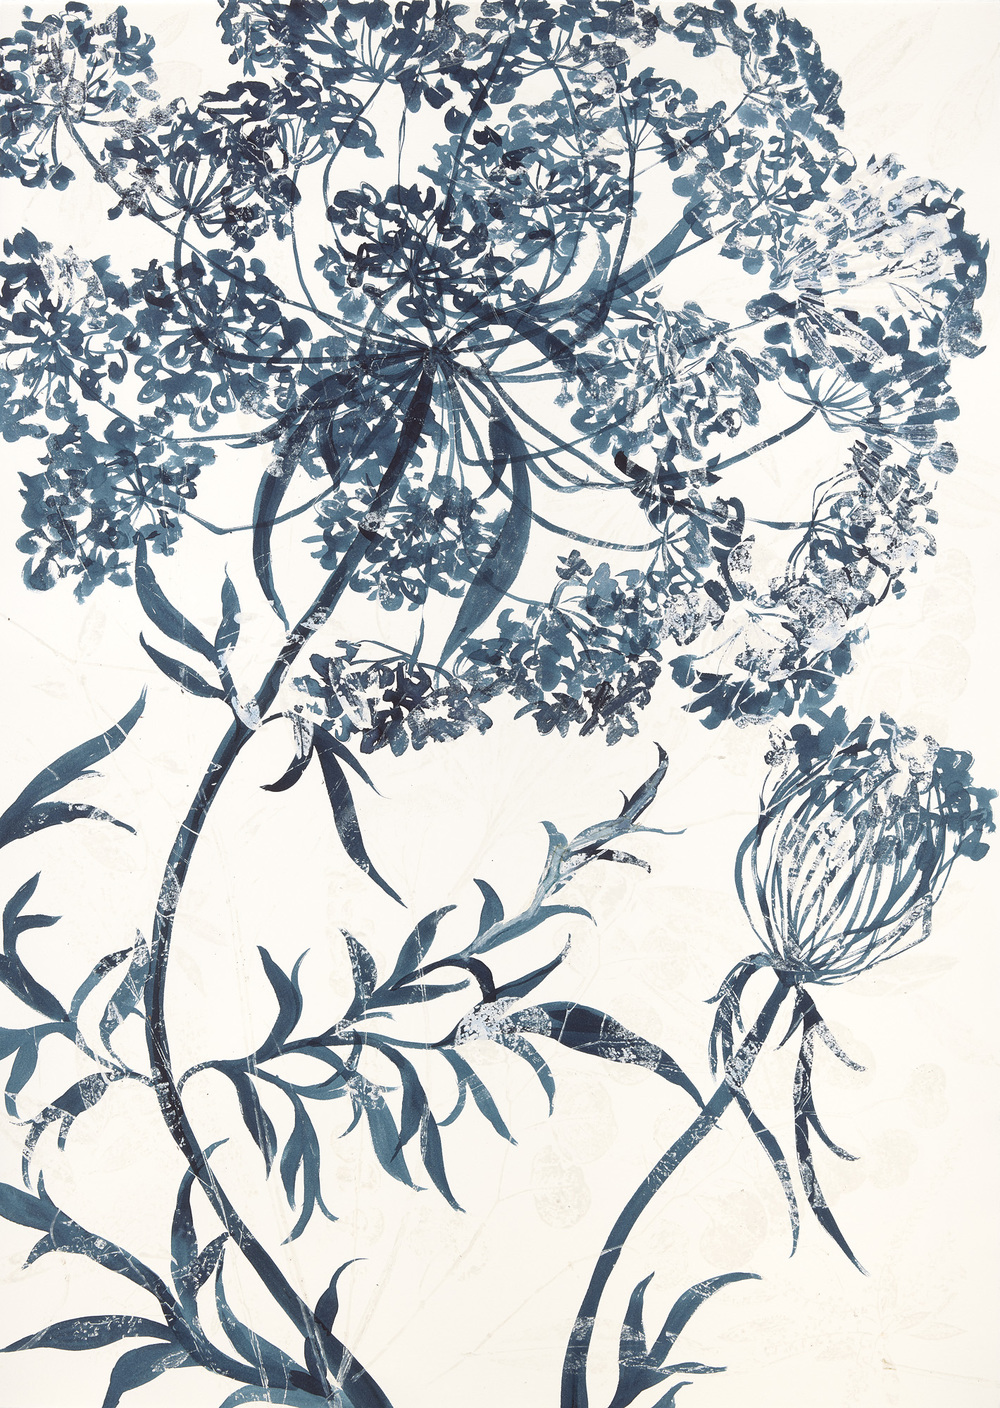 Cynthia MacCollum Botanica Monotype with Painting/rinsed print